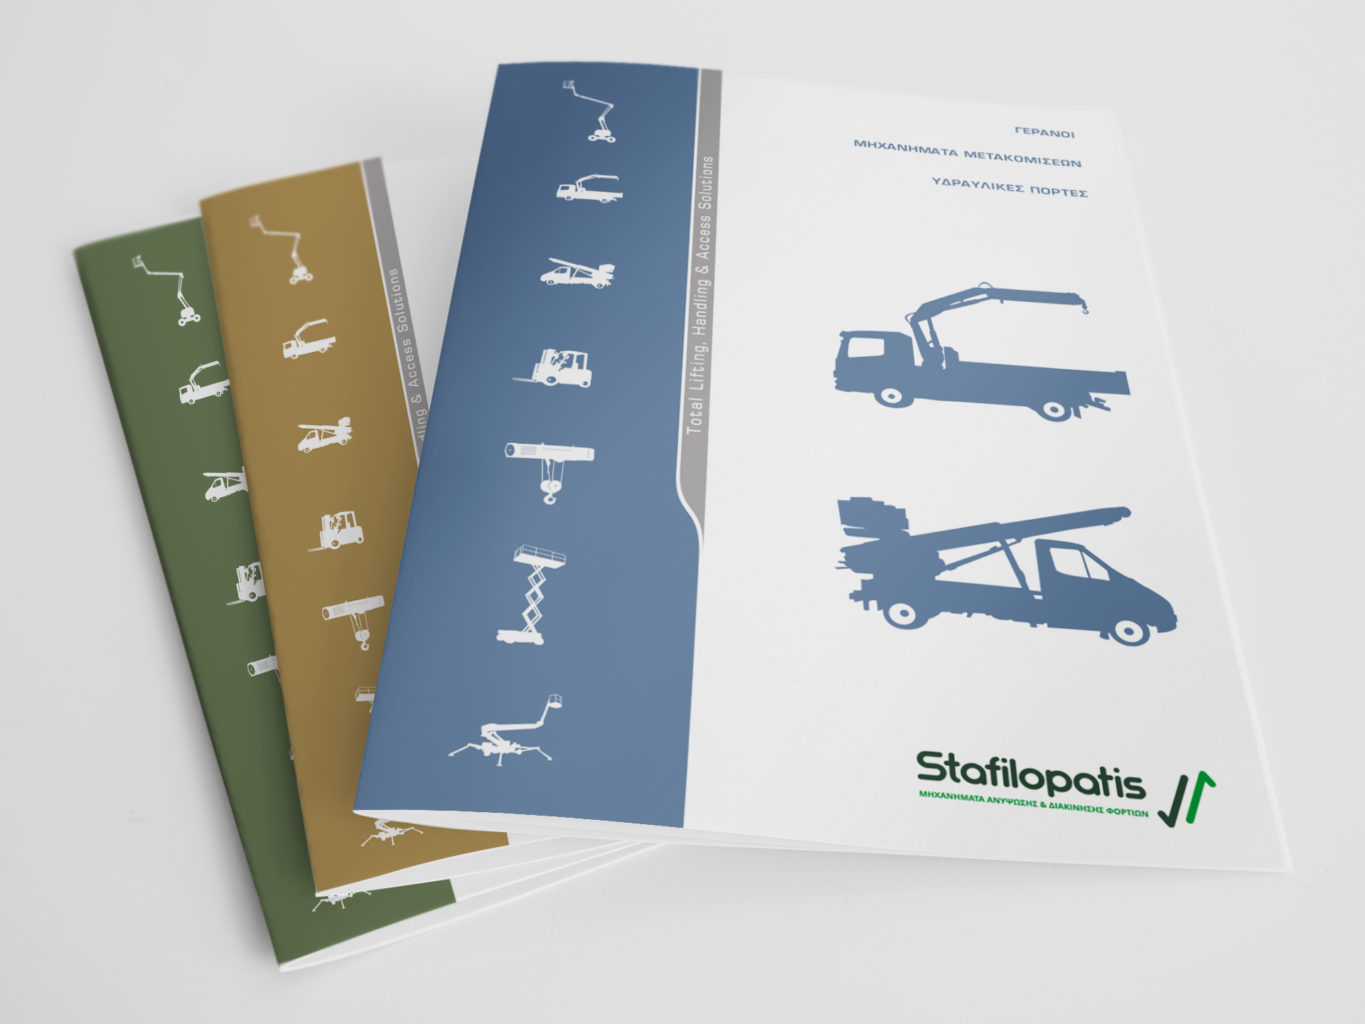 Stafilopatis lifting, handling and access equipment catalogues